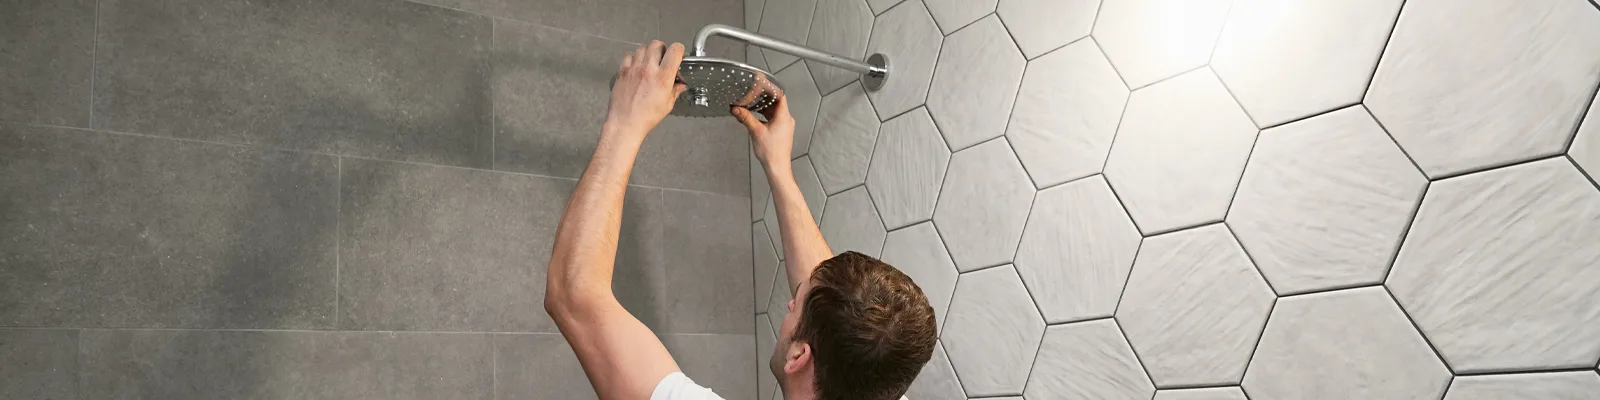 installing showerhead 1600x400